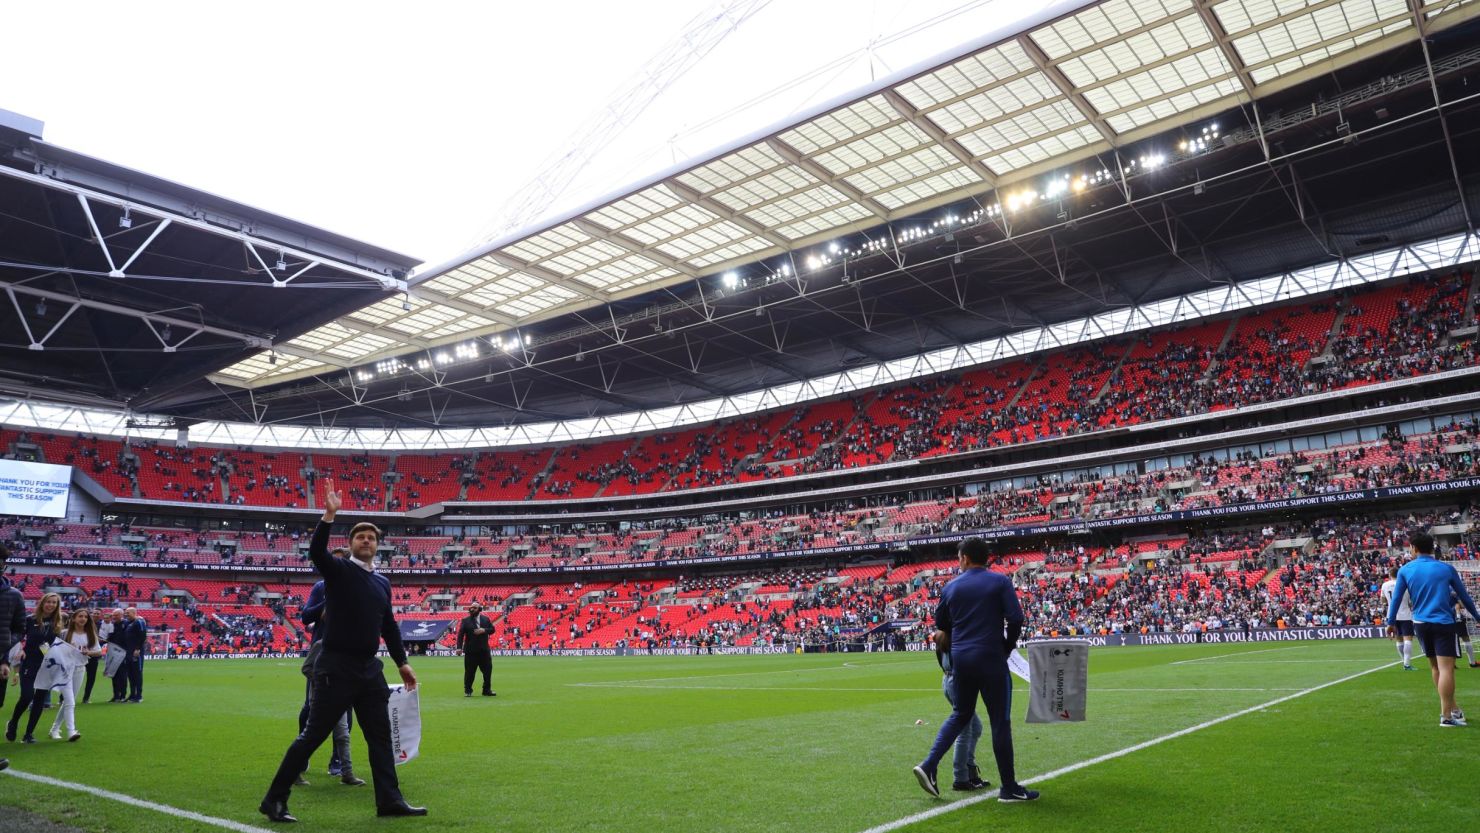 Tottenham Hotspur used Wembley Stadium last season to play its home games.